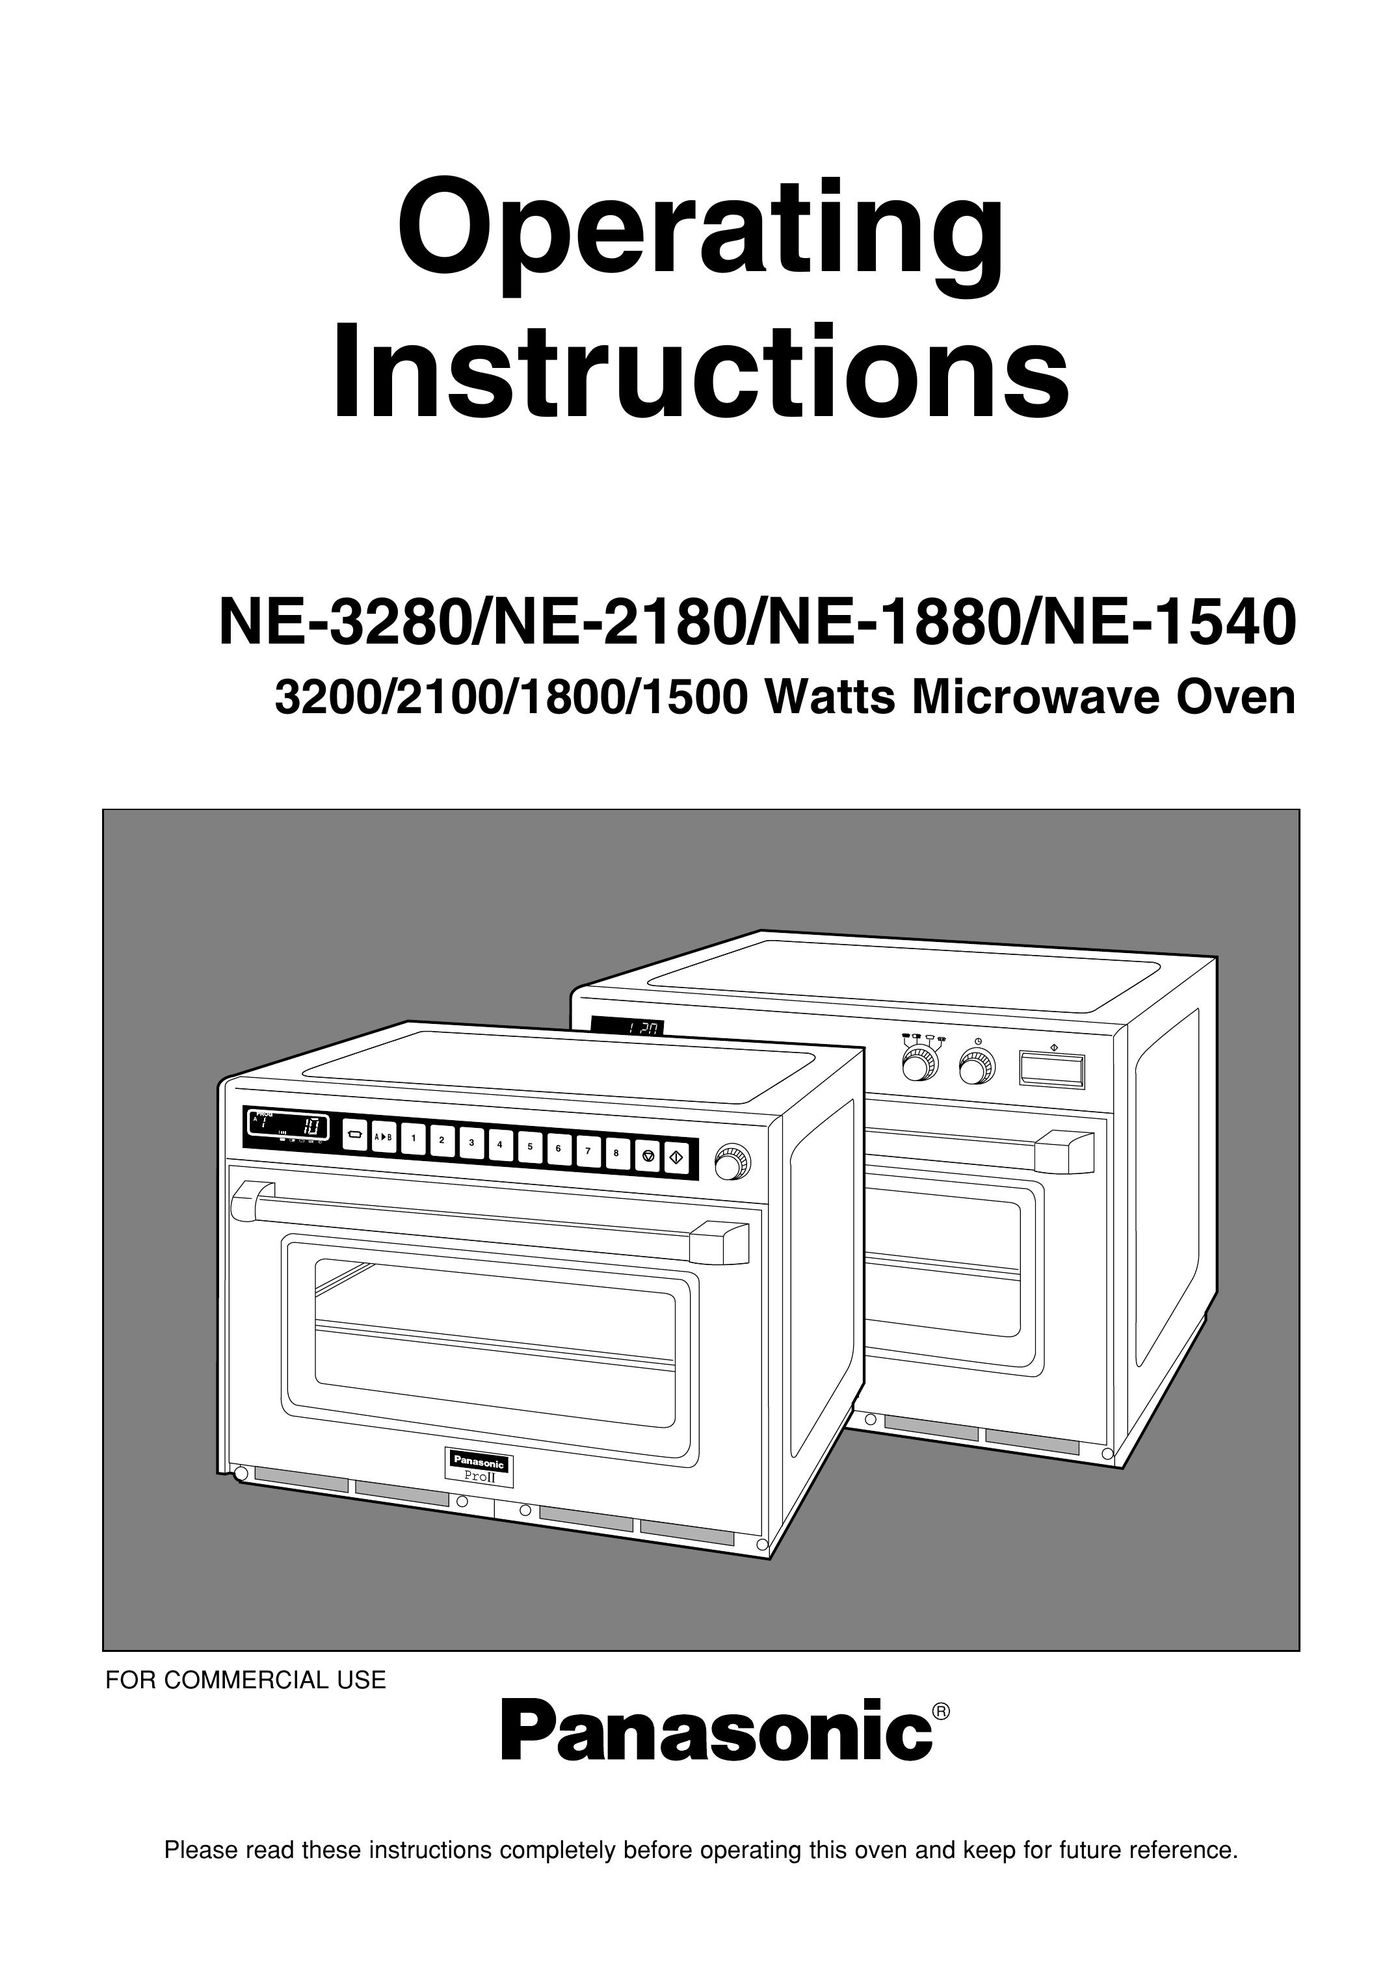 Panasonic NE-1540 Microwave Oven User Manual